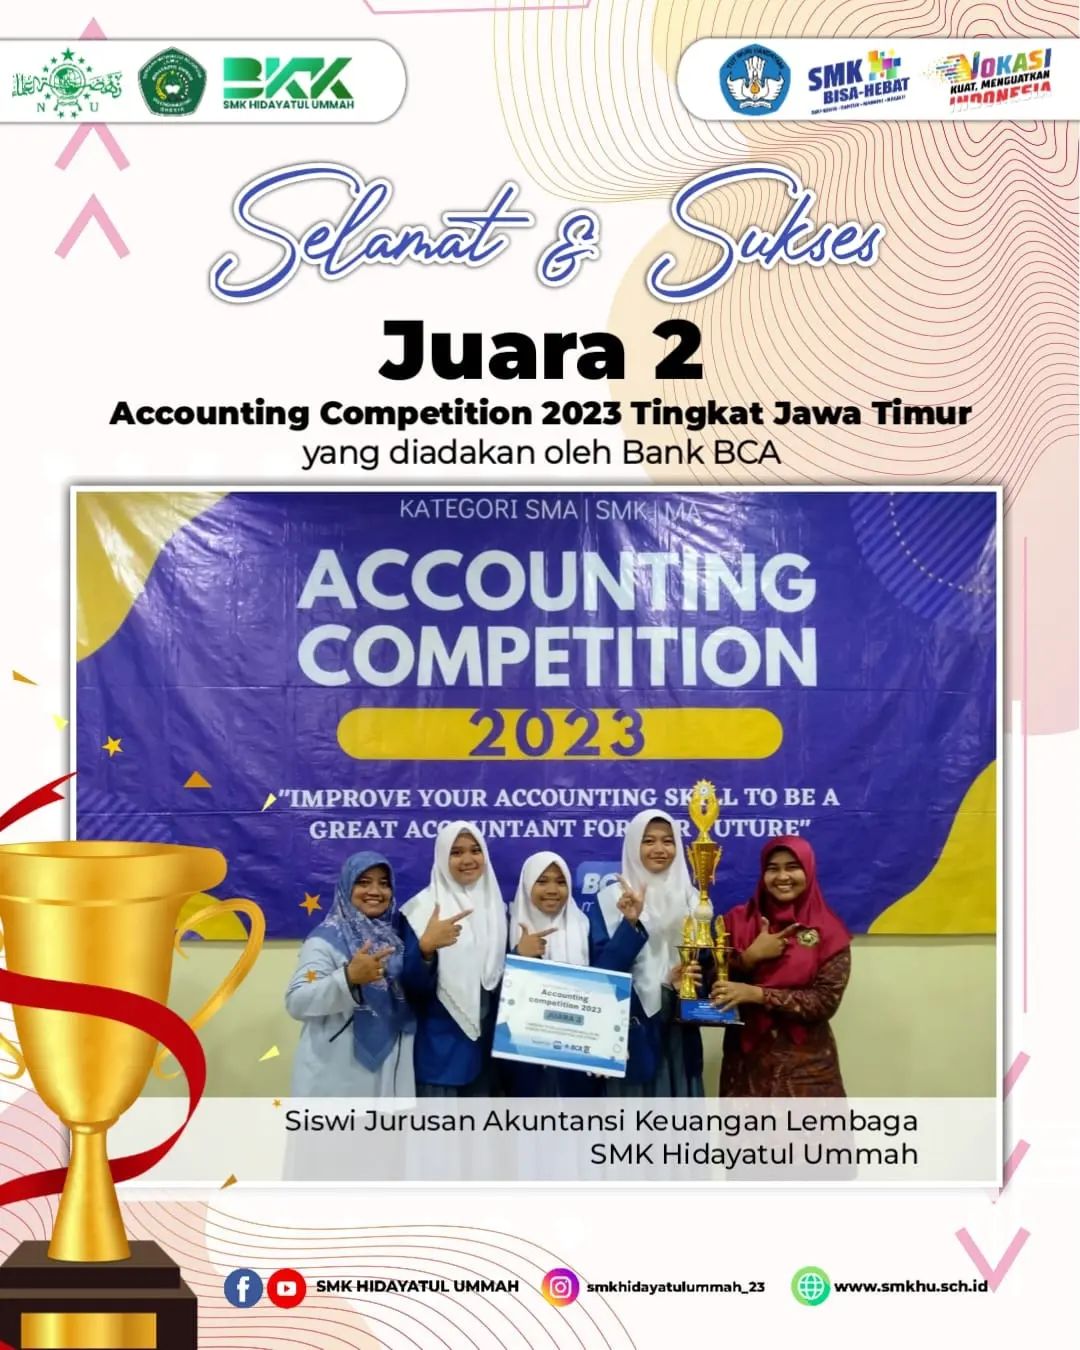 JUARA 2 "ACCOUNTING COMPETTION 2023" Tingkat Jawa Timur